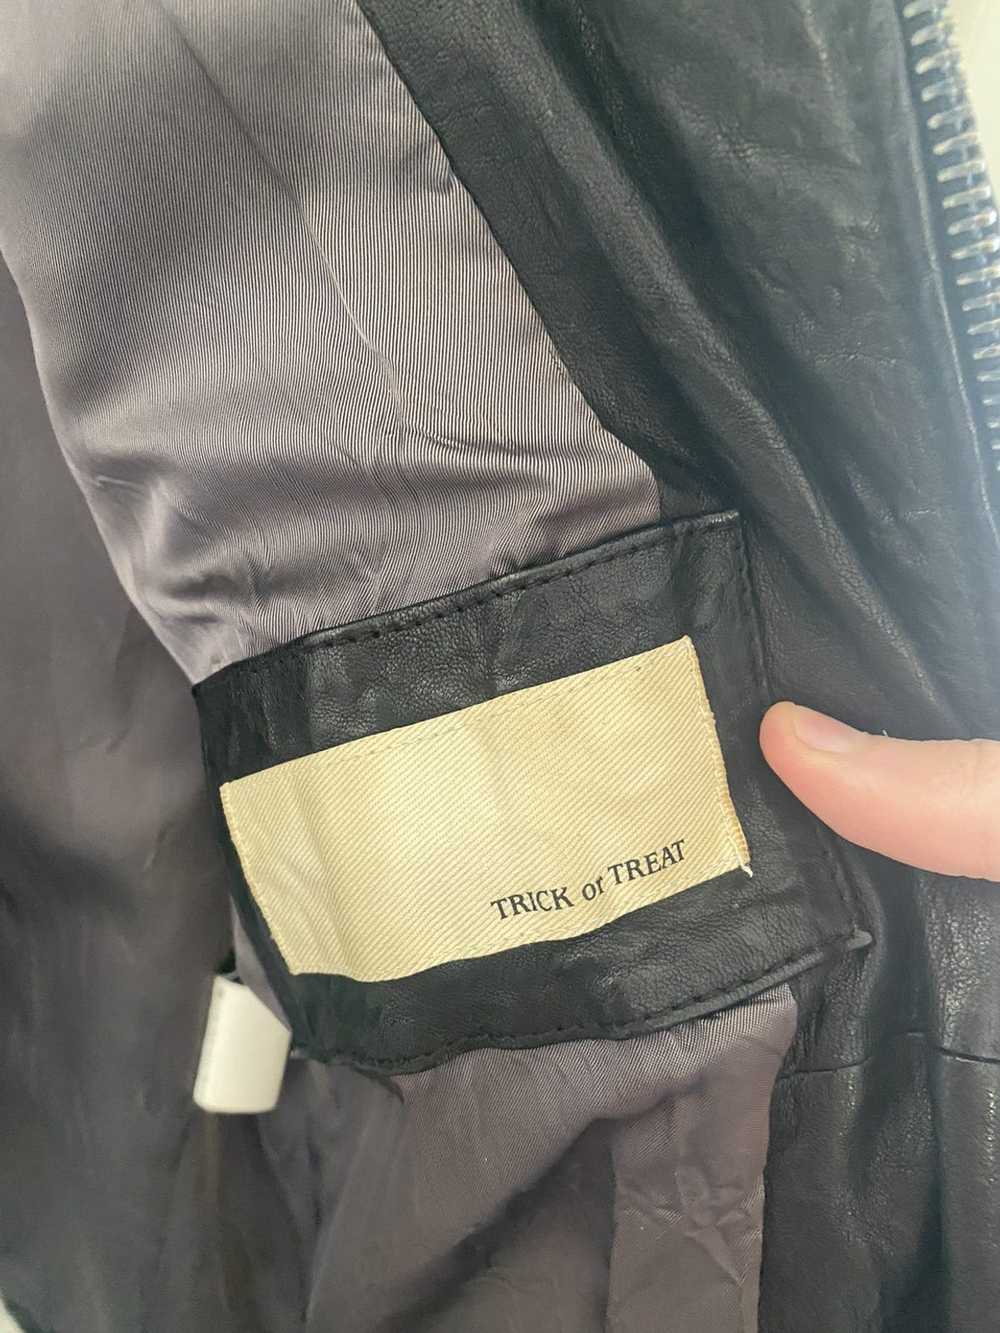 Japanese Brand Trick or Treat Black Leather Jacket - image 5